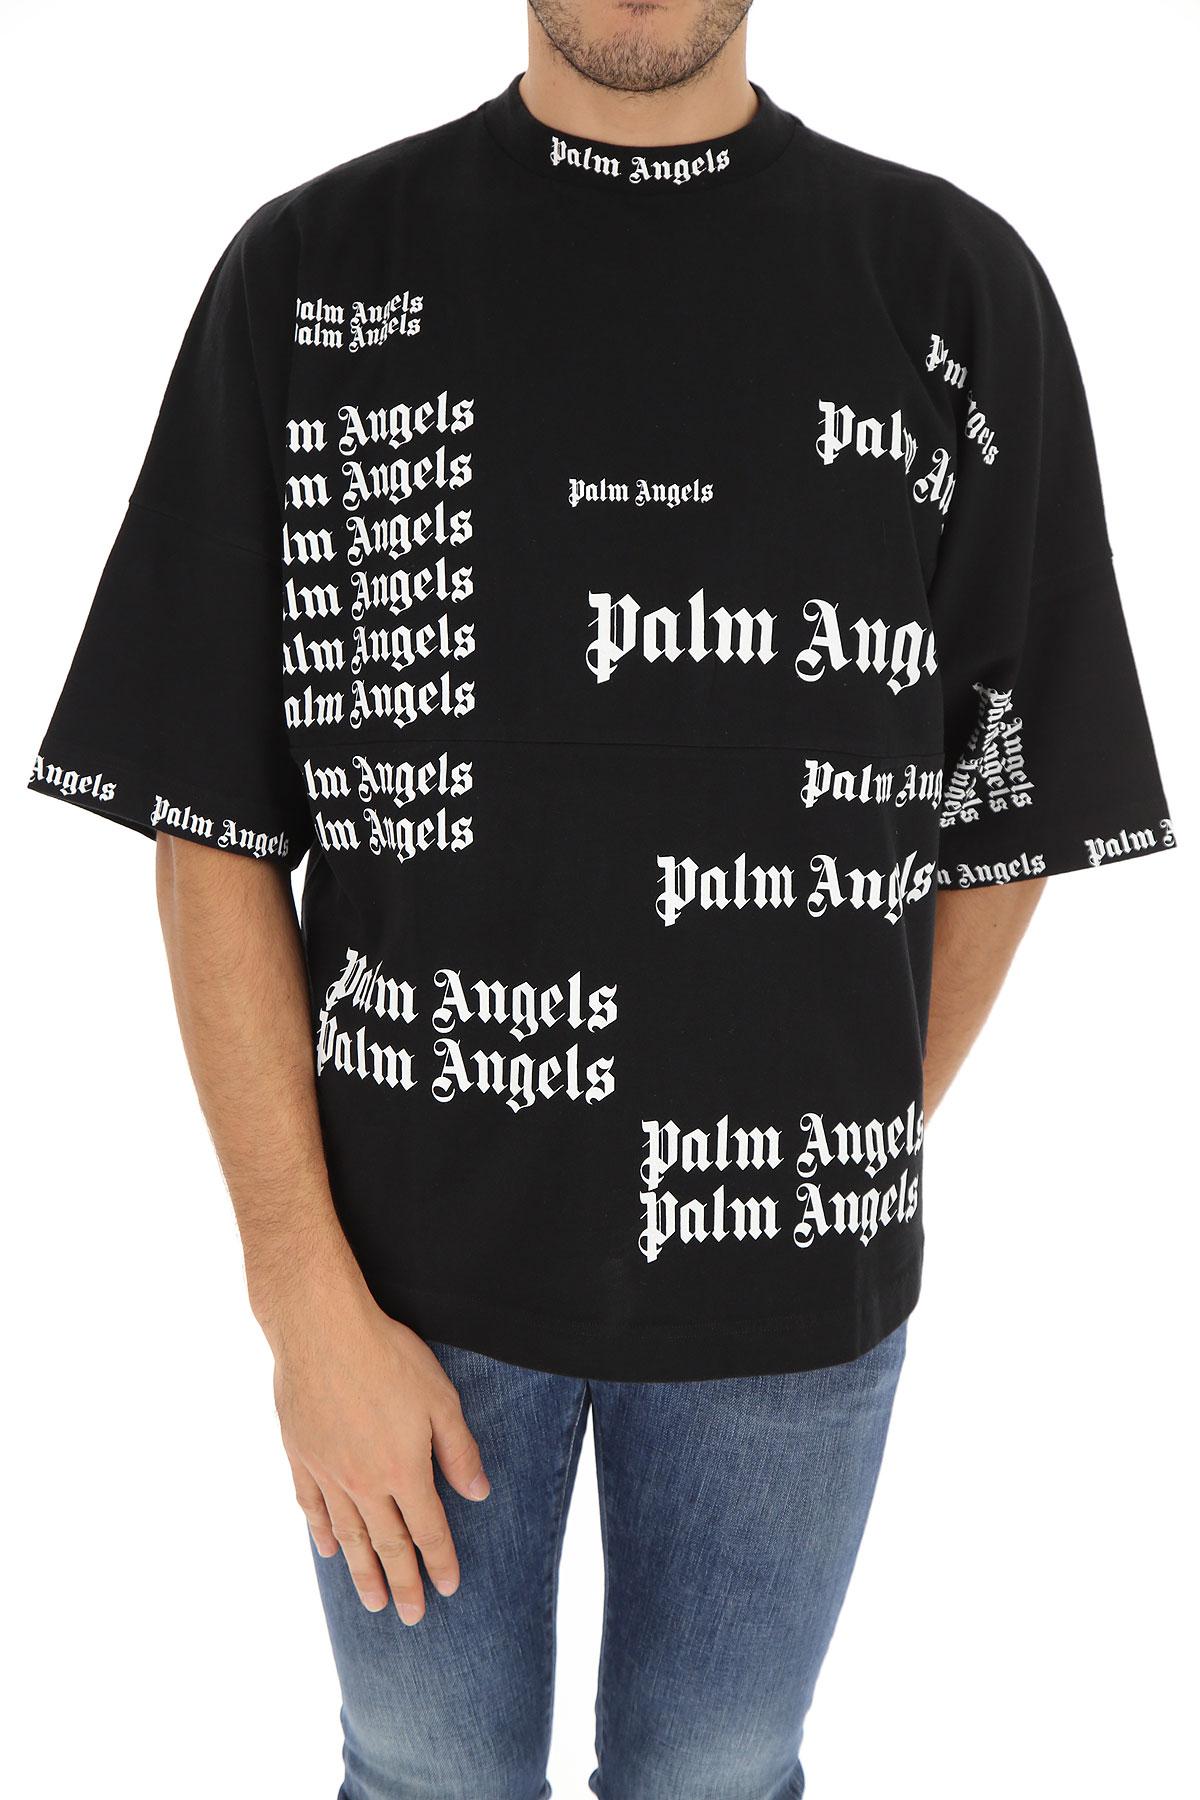 palm angels t shirt on sale